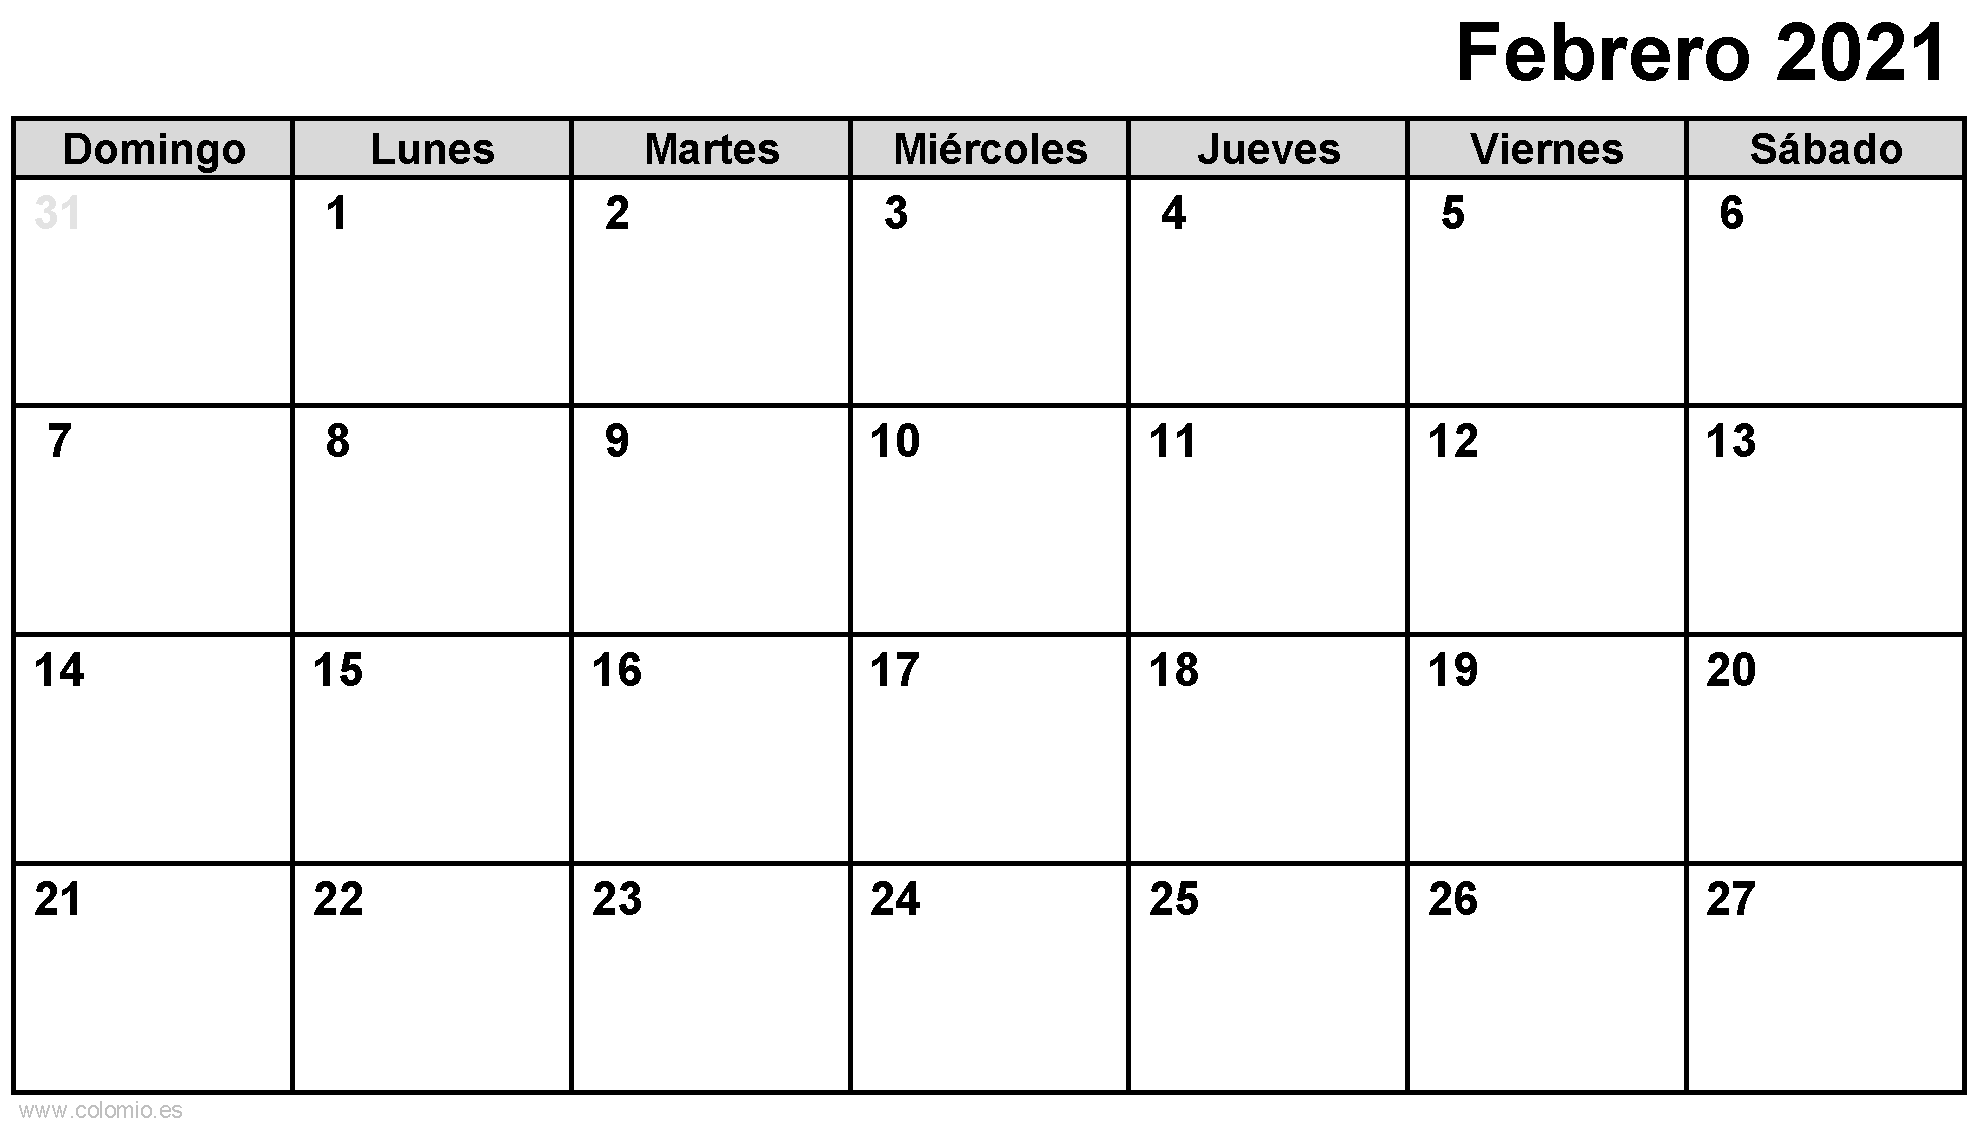 Febrero 2021 Calendar para imprimir